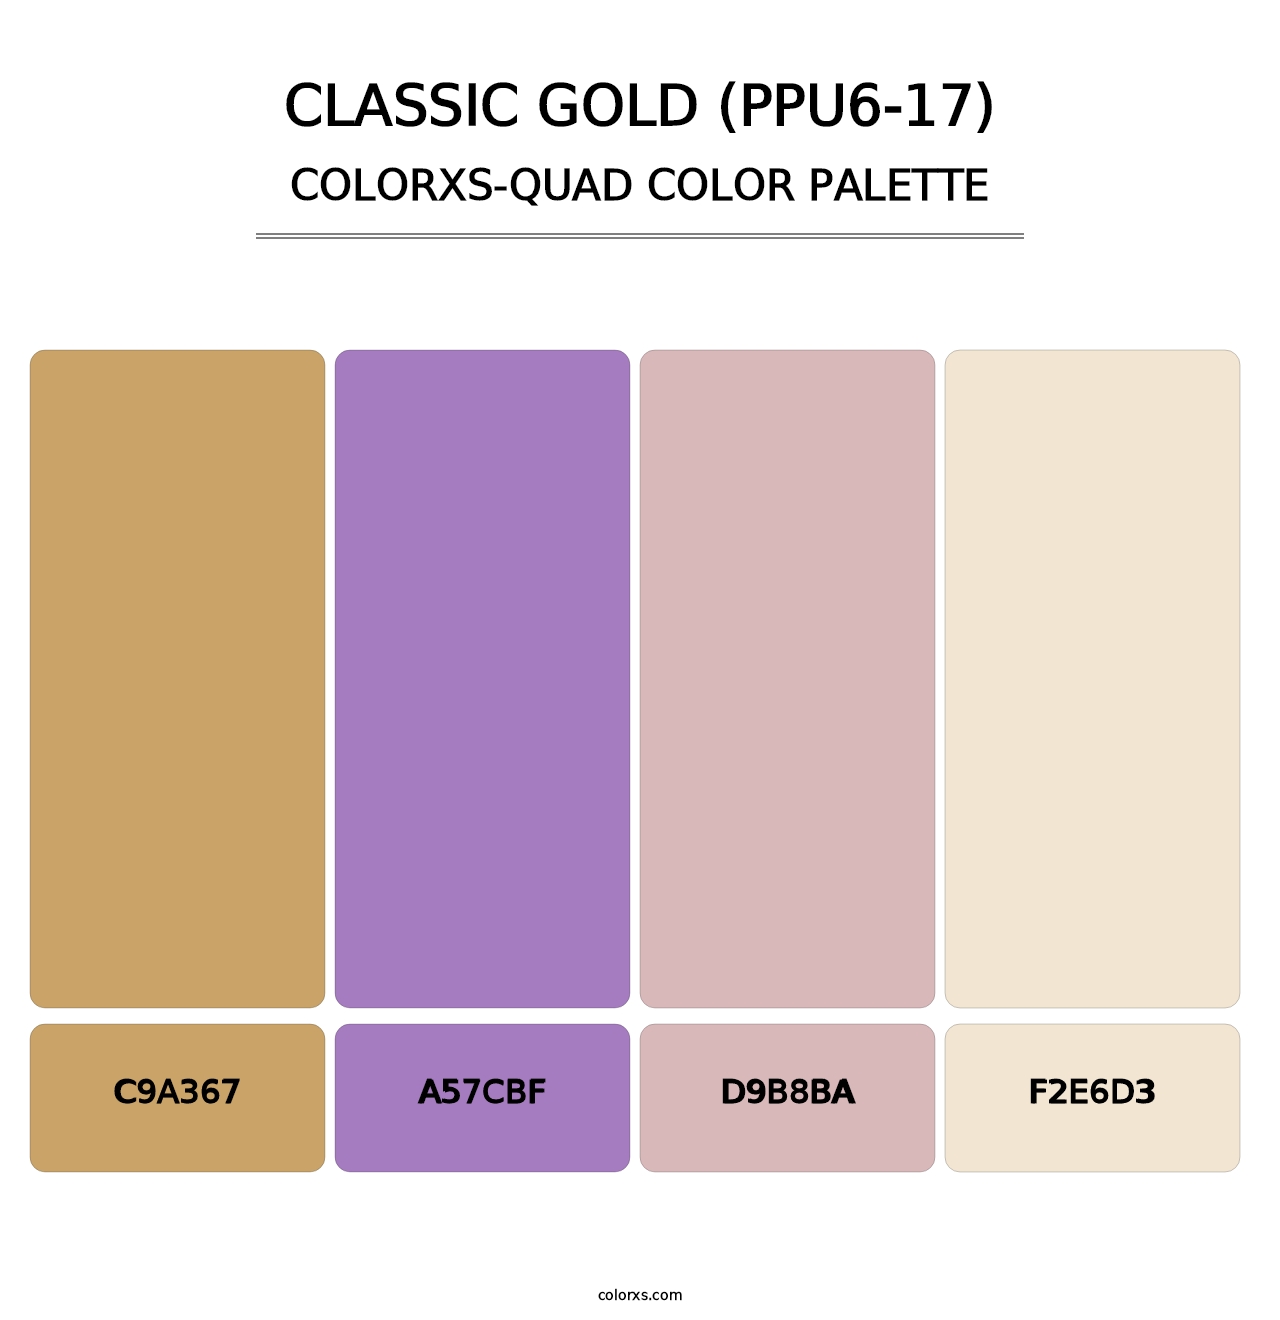 Classic Gold (PPU6-17) - Colorxs Quad Palette